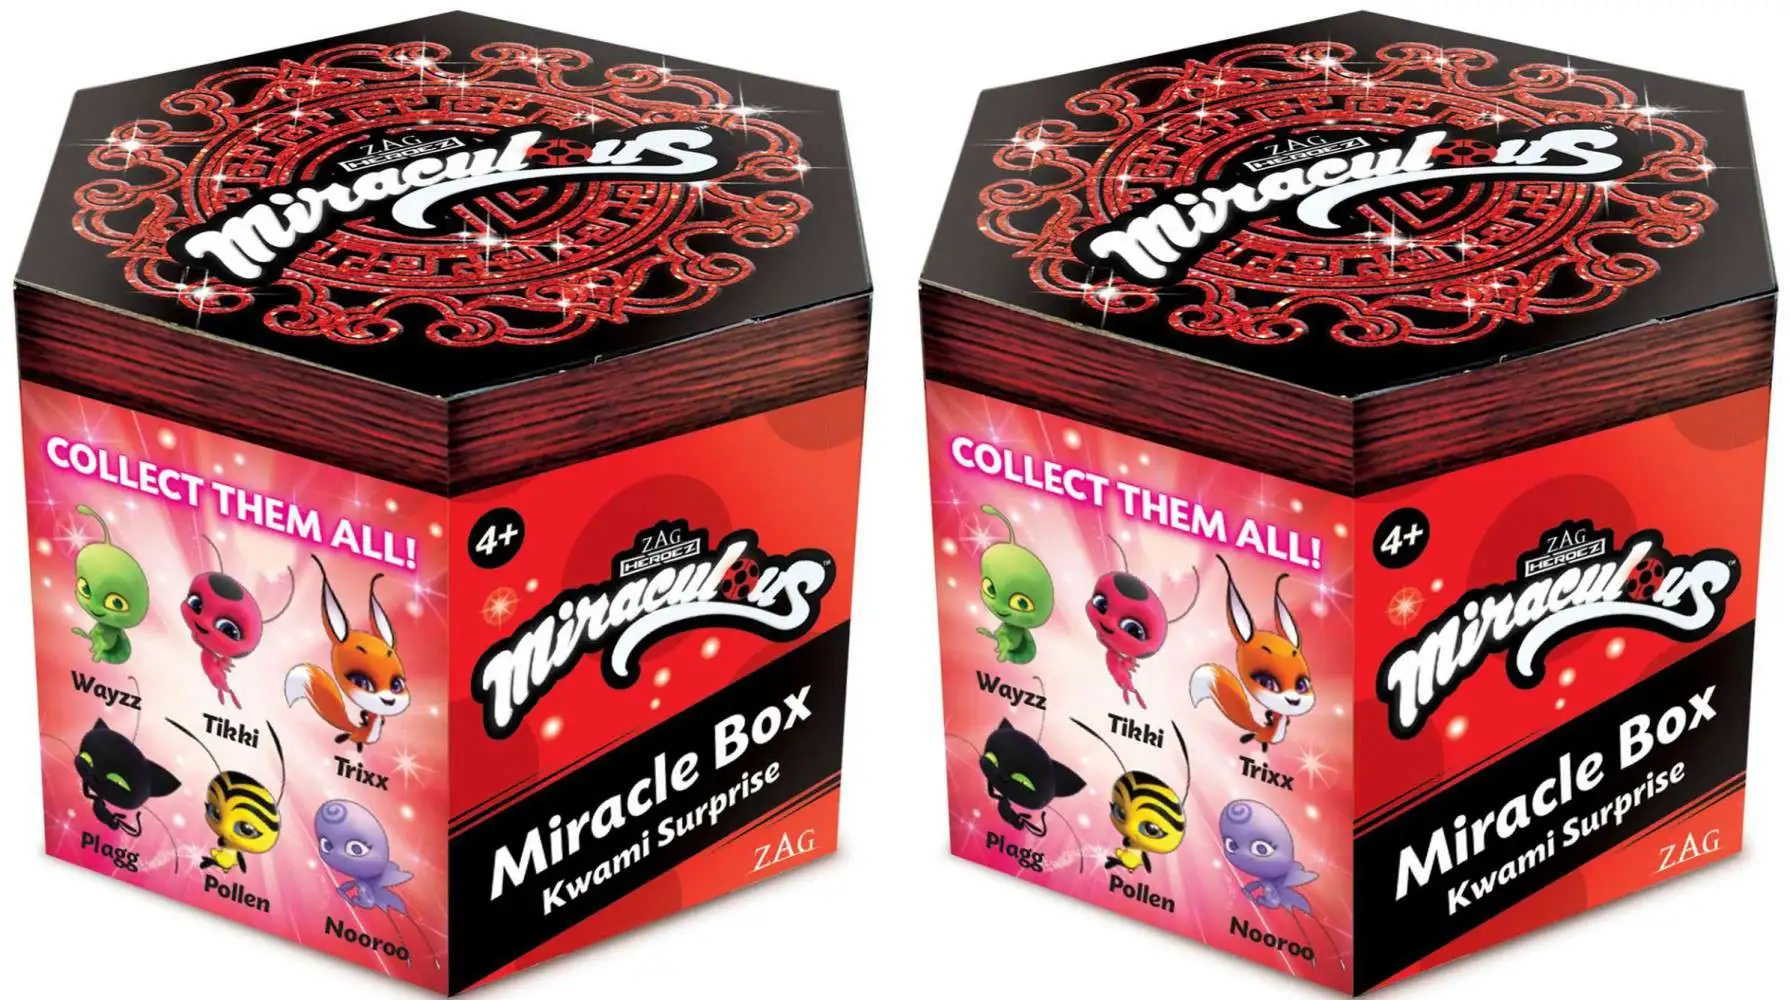 Miraculous Miracle Box - Kwami Surpise Blind Box (Single Box